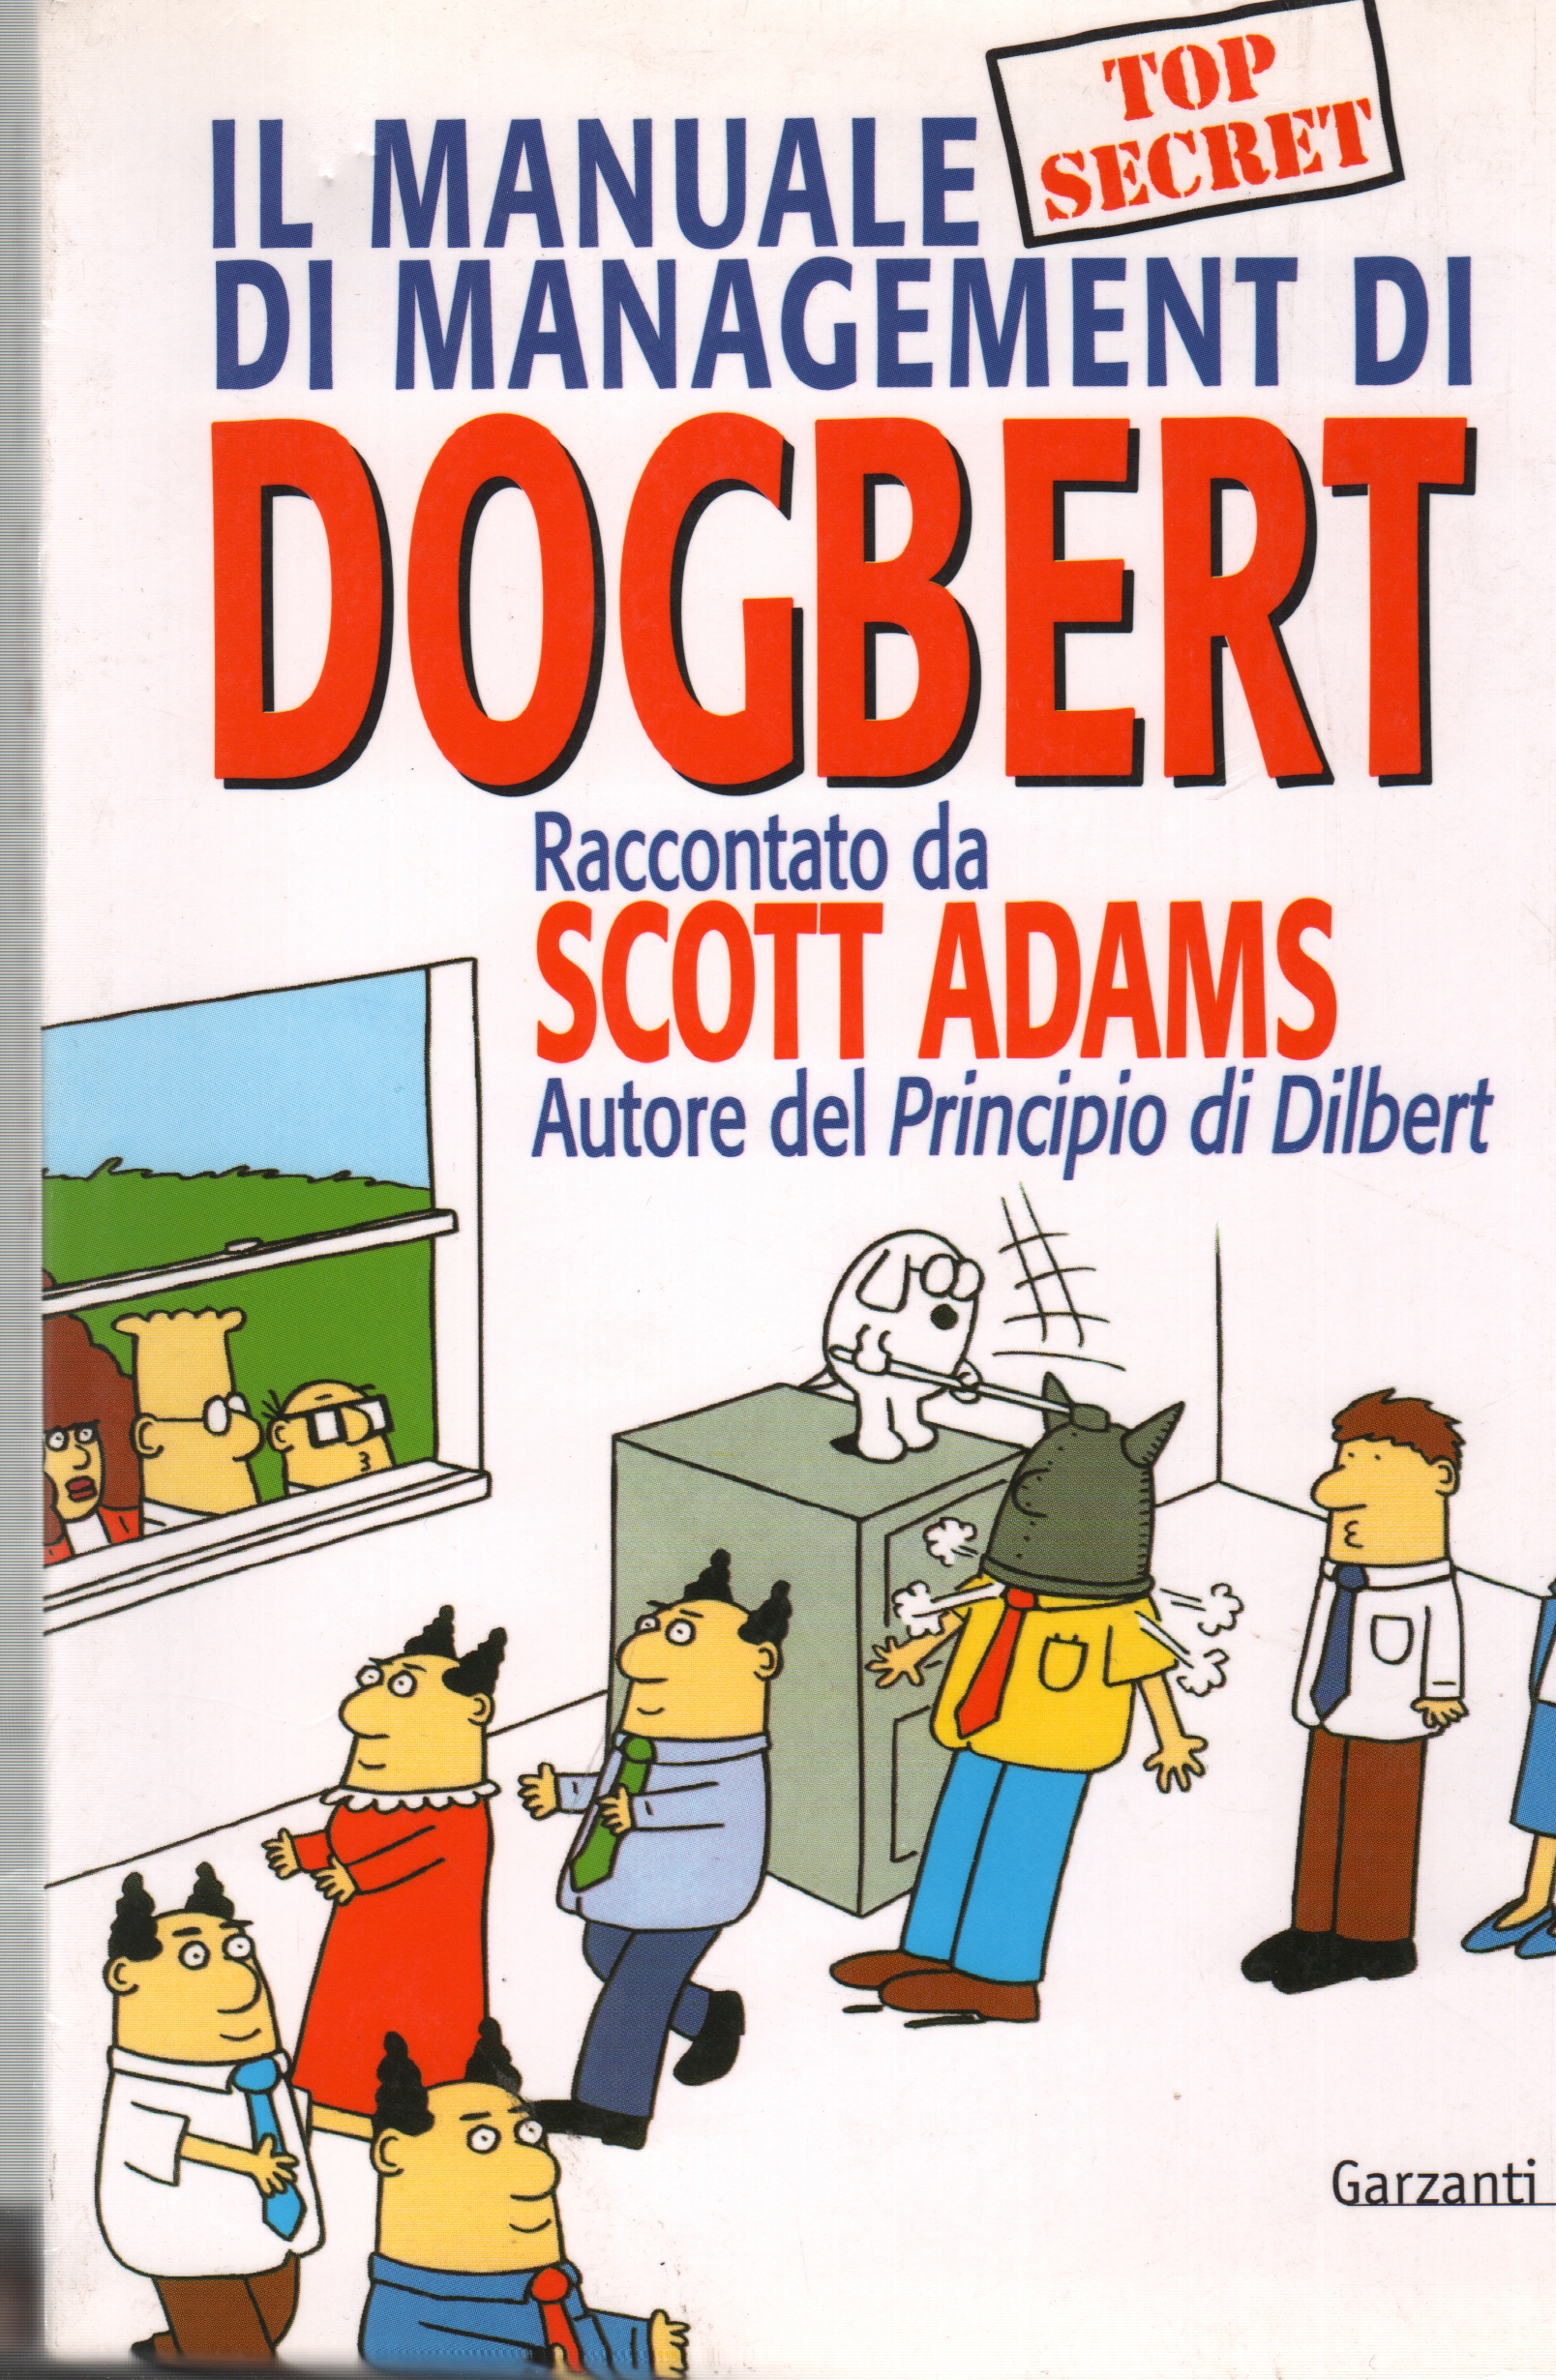 Dogbert's management manual